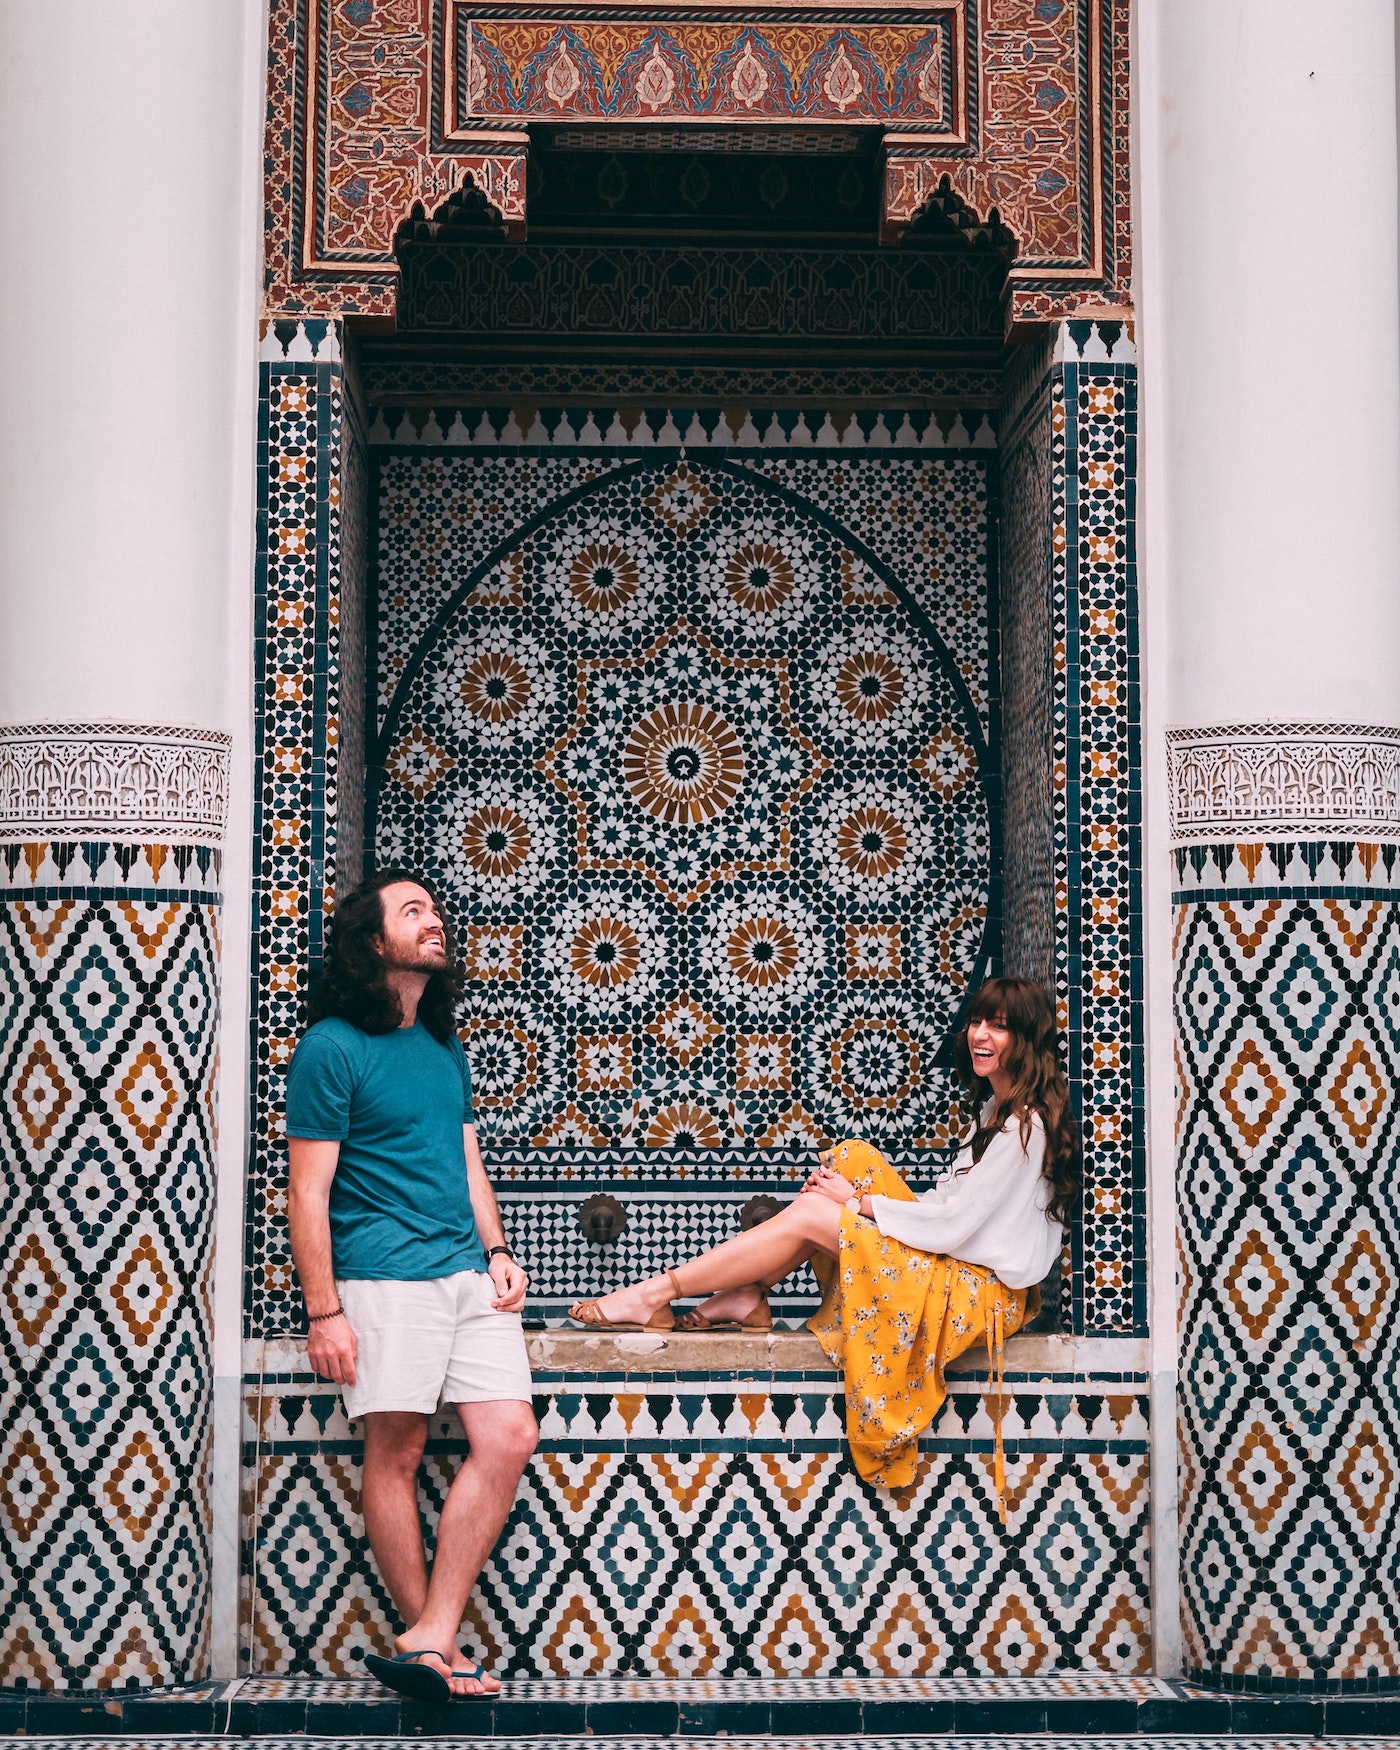 MOROCCO Marrakesh - Happy Couple im Mosaic Gebäude